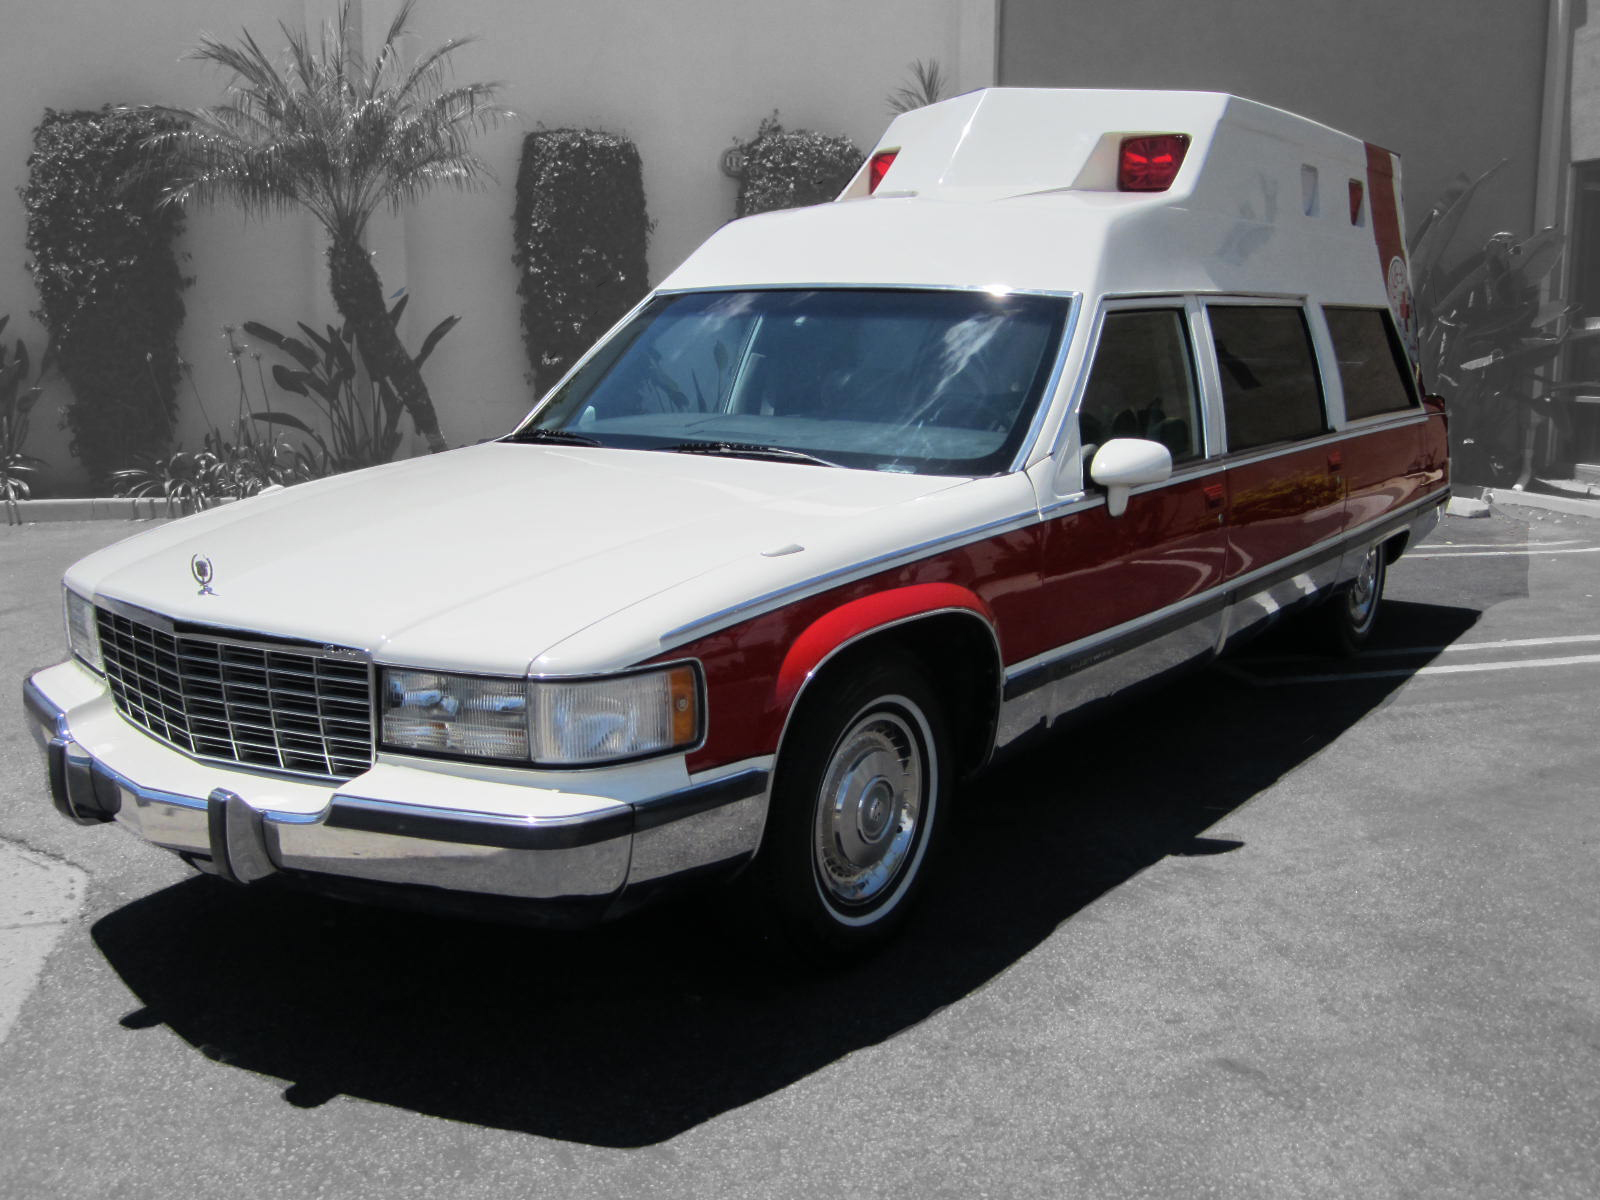 1993 Cadiilac Fleetwood Ambulance For Sale 005